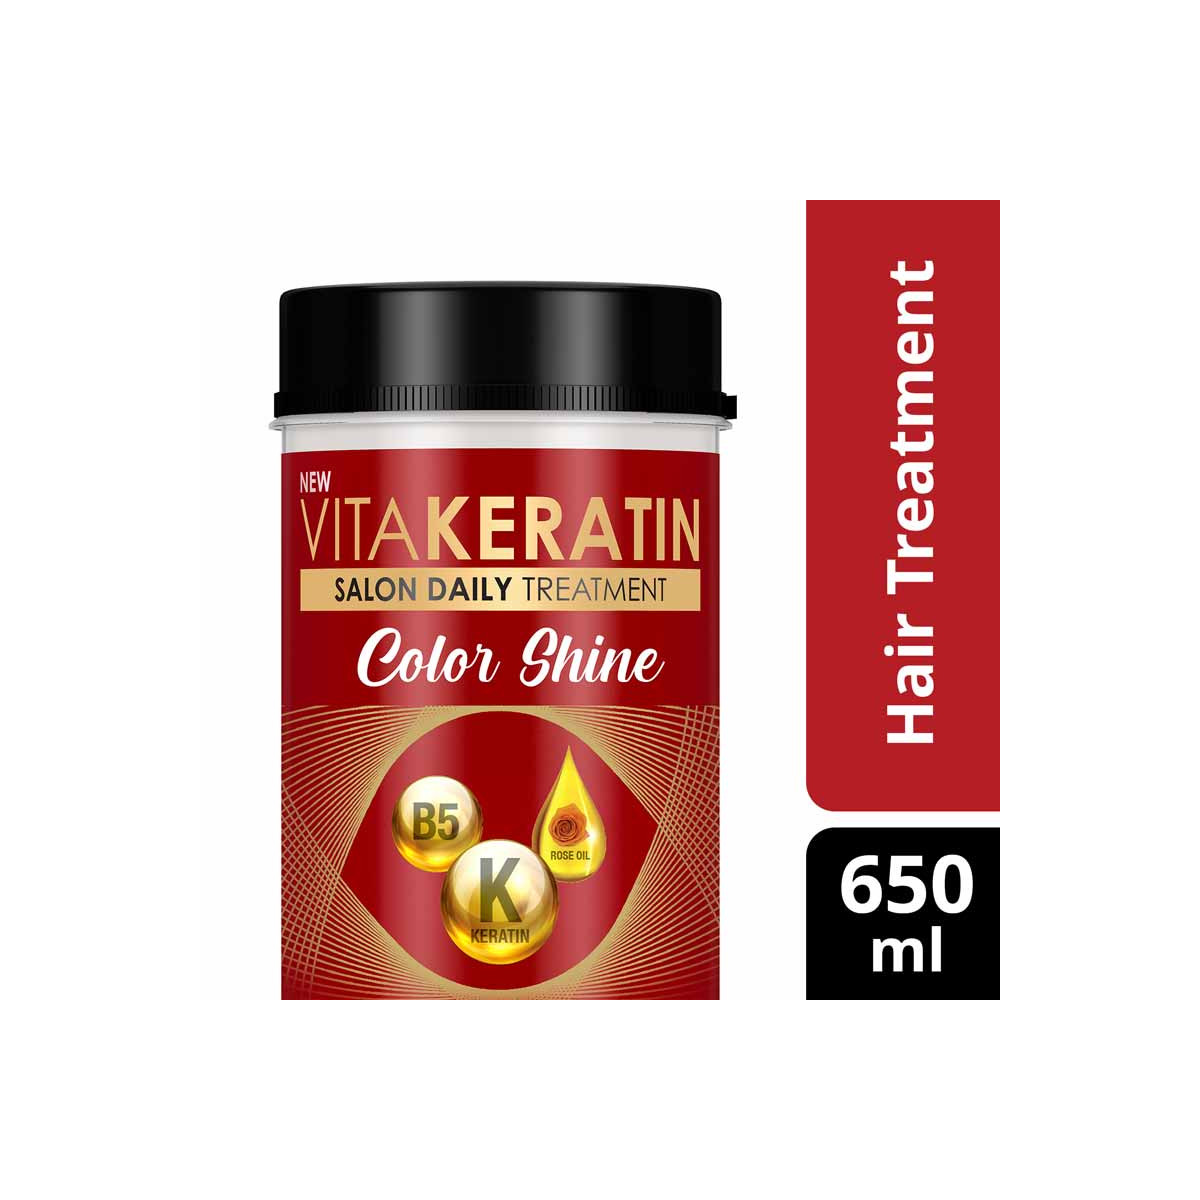 Vitakeratin Treatment Color Shine 650ml